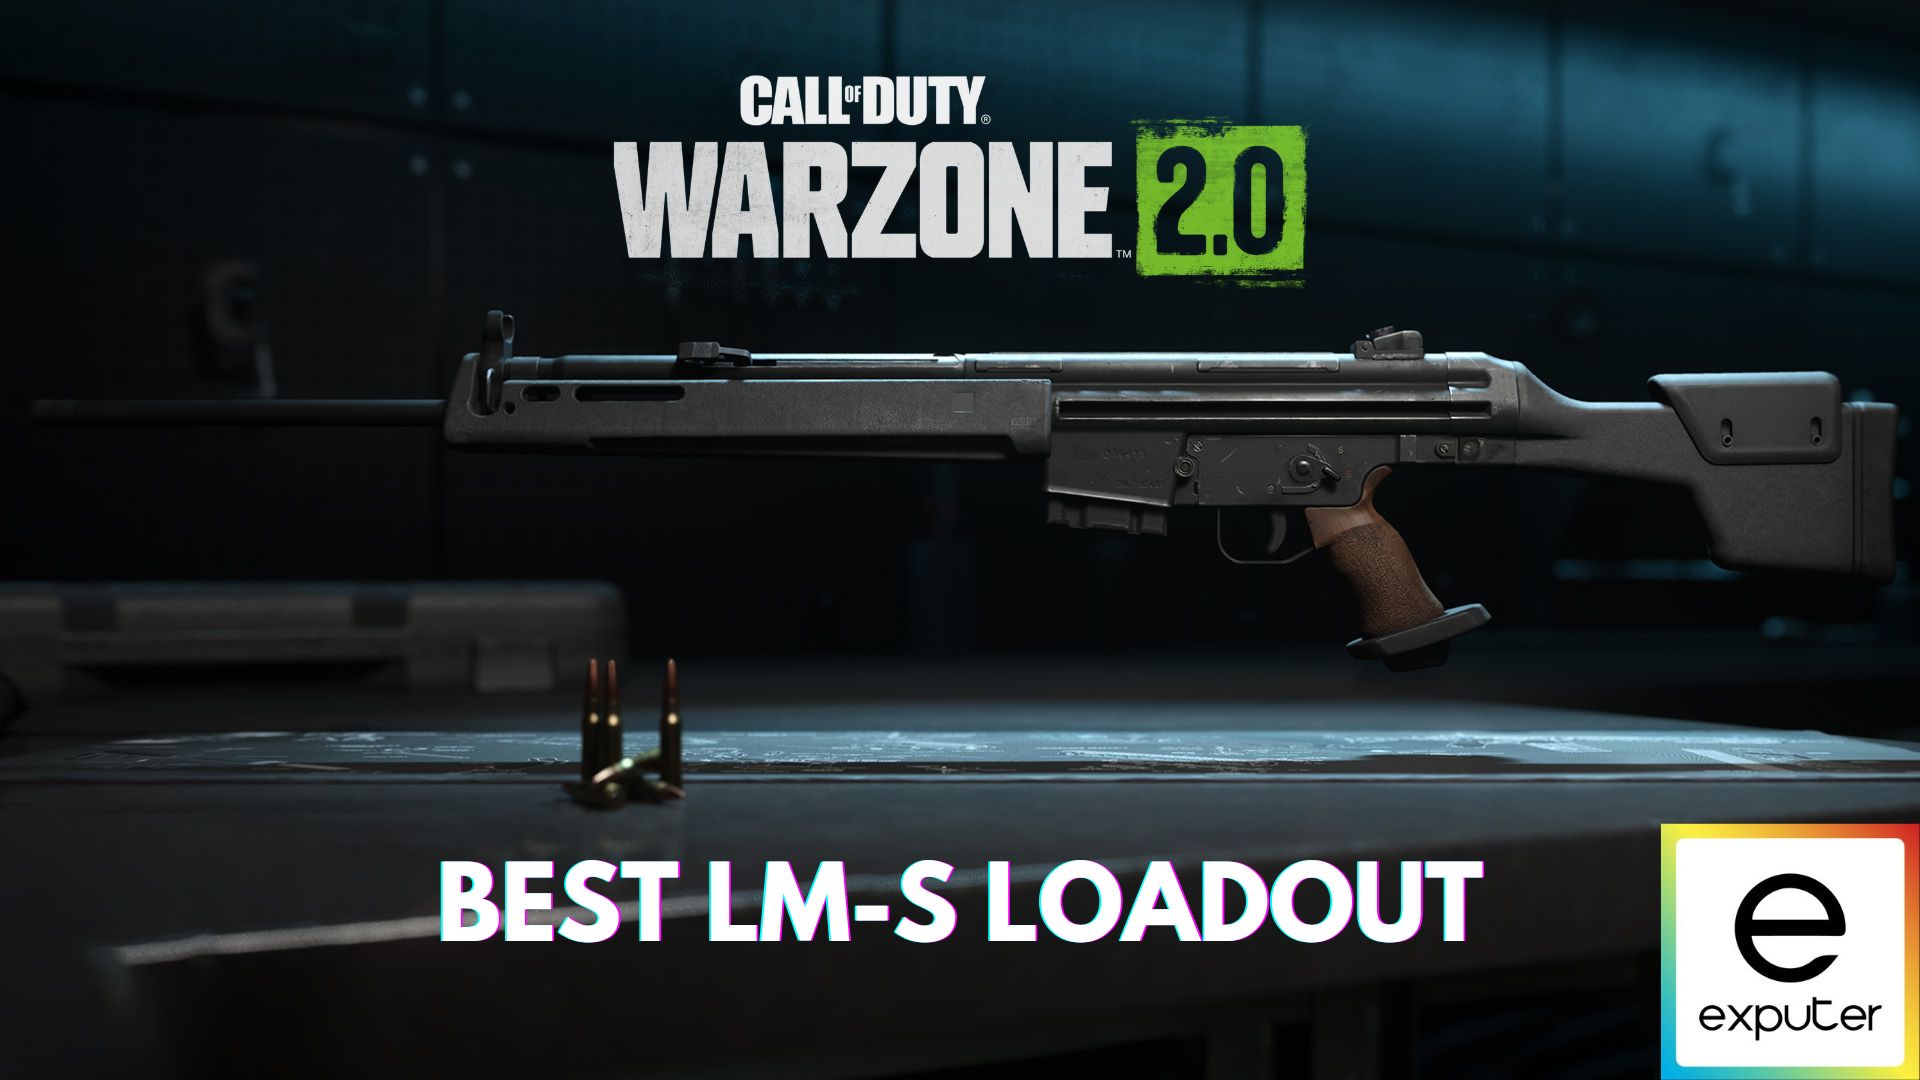 Best LM-S loadout in Cod warzone 2.0